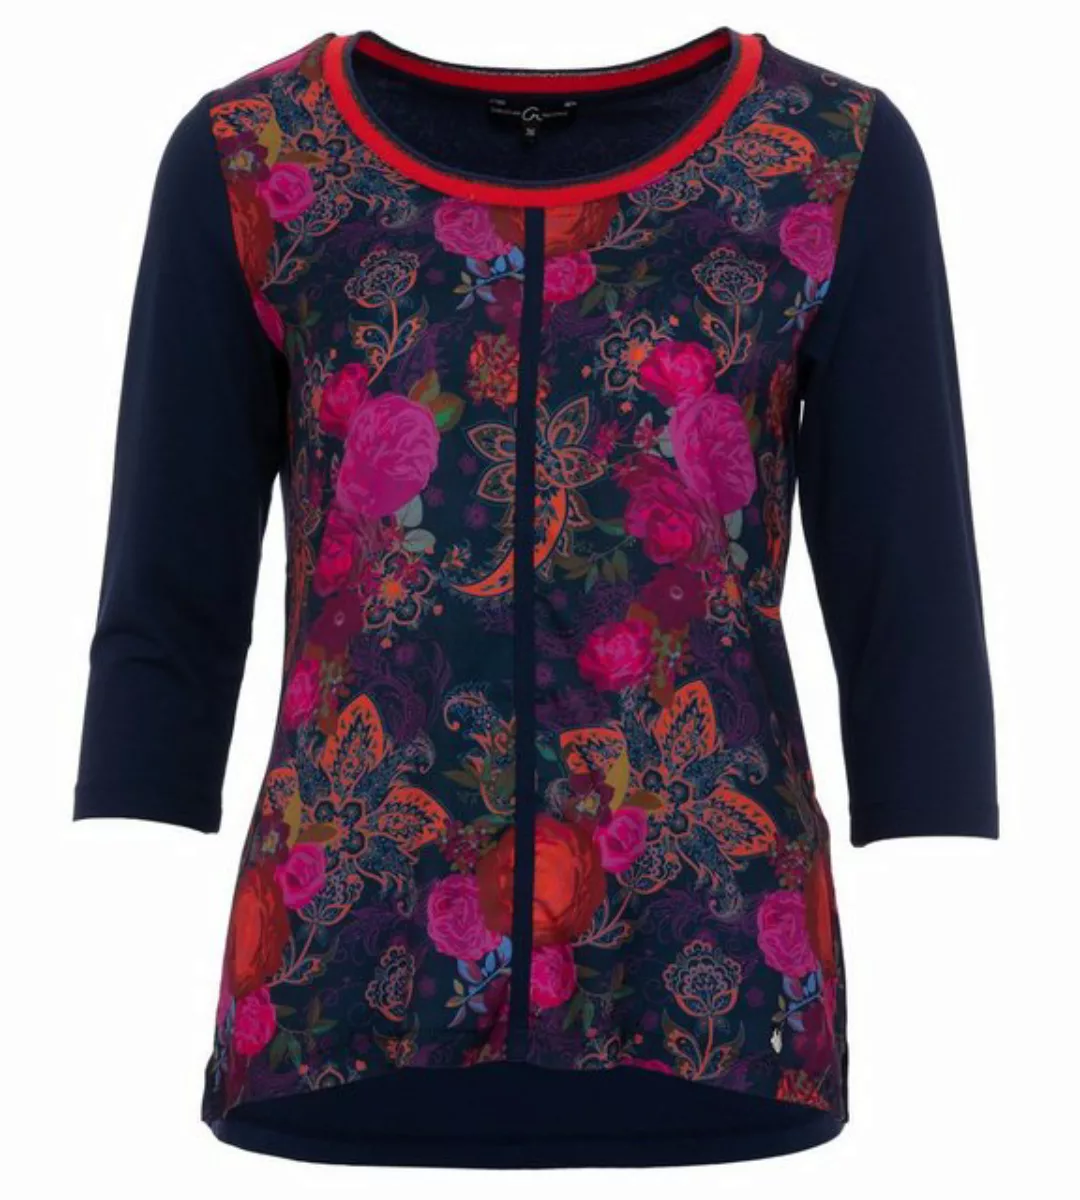 Christian Materne 3/4-Arm-Shirt Bluse koerpernah mit floralem Druck günstig online kaufen